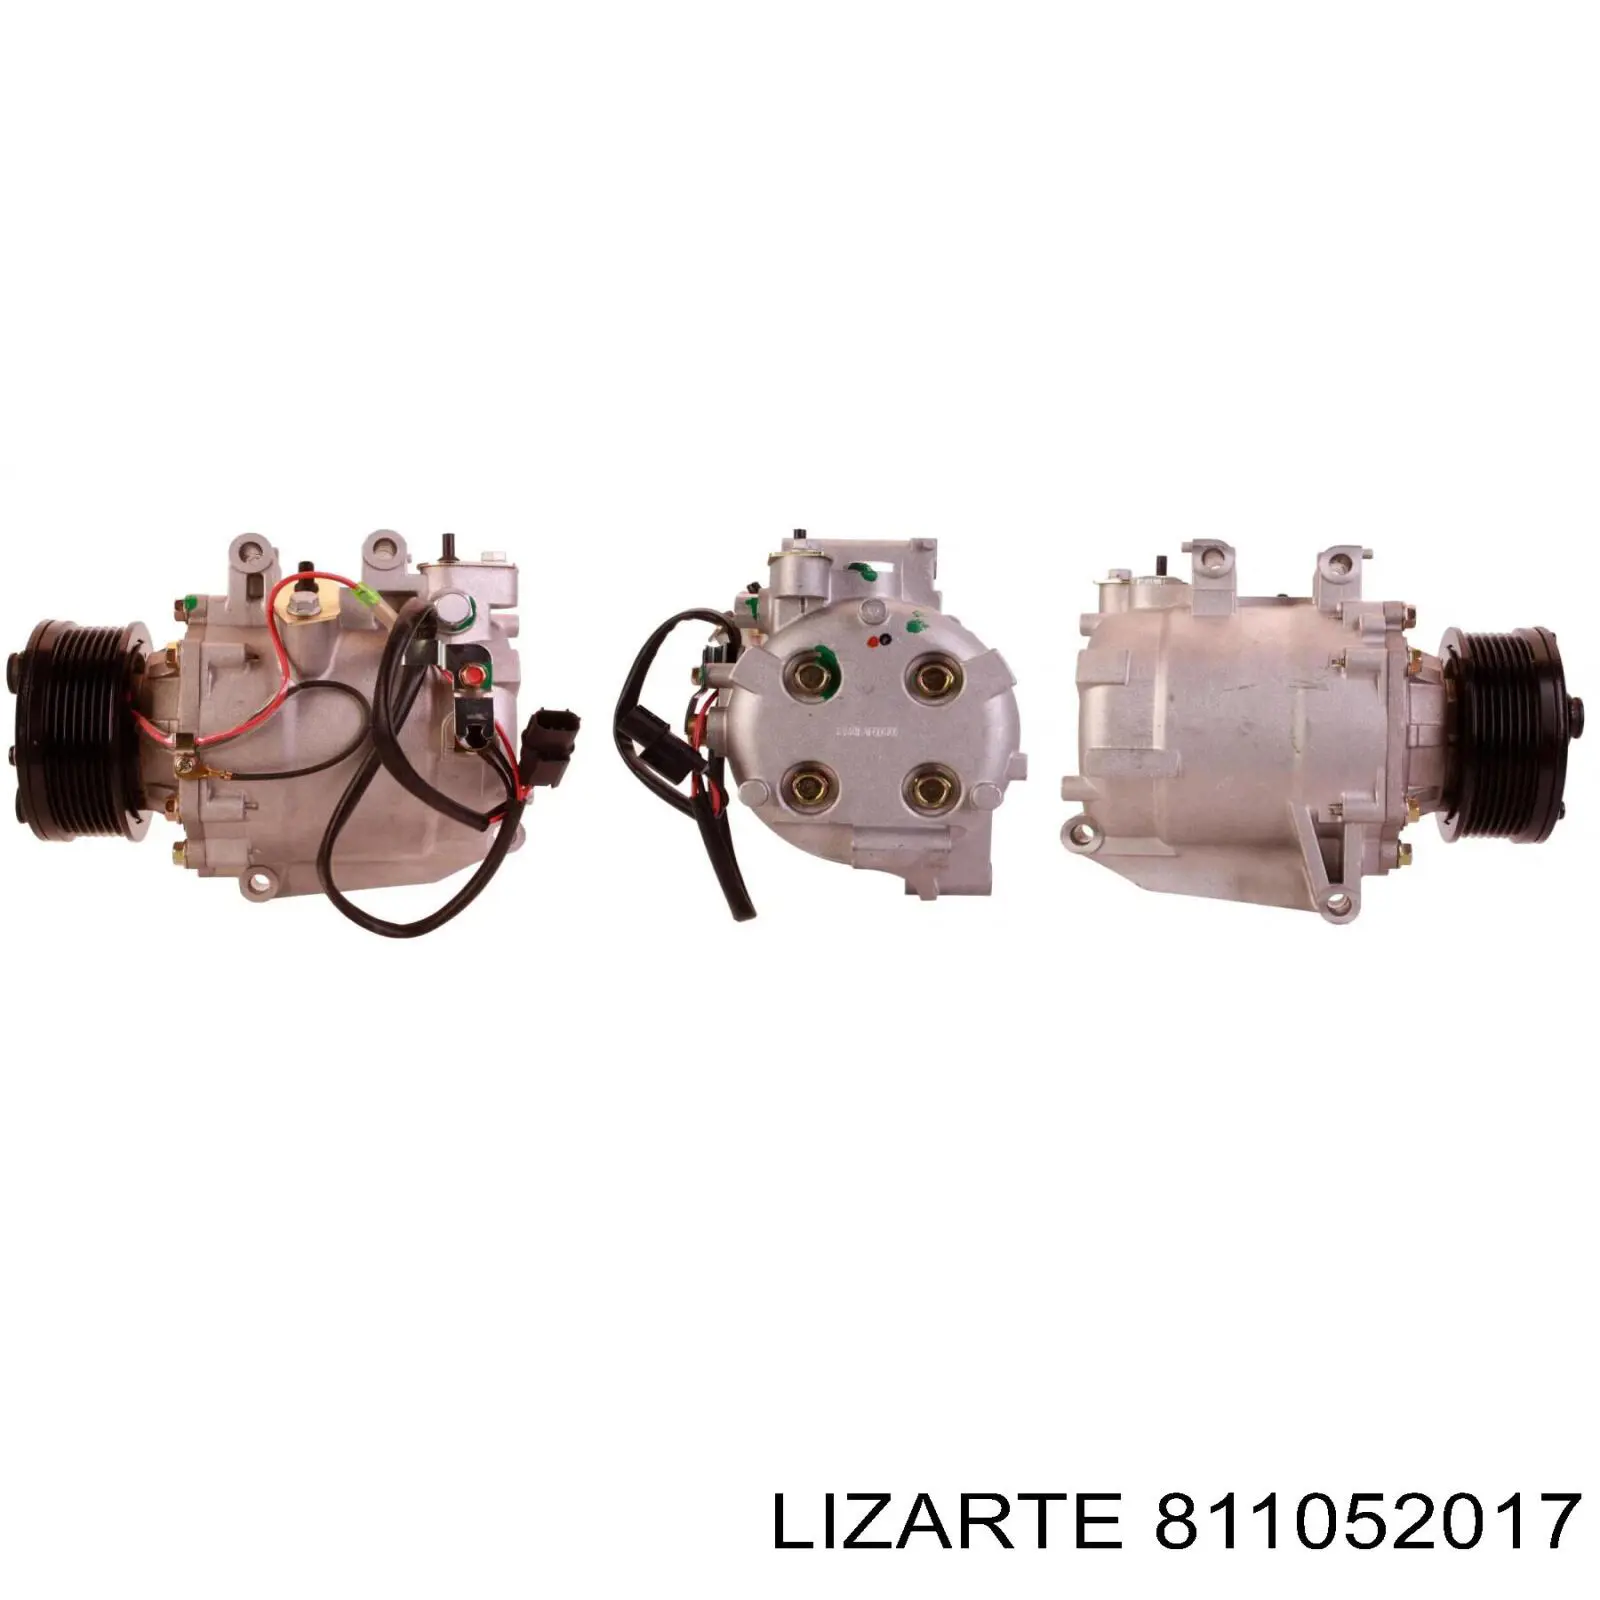 811052017 Lizarte compresor de aire acondicionado